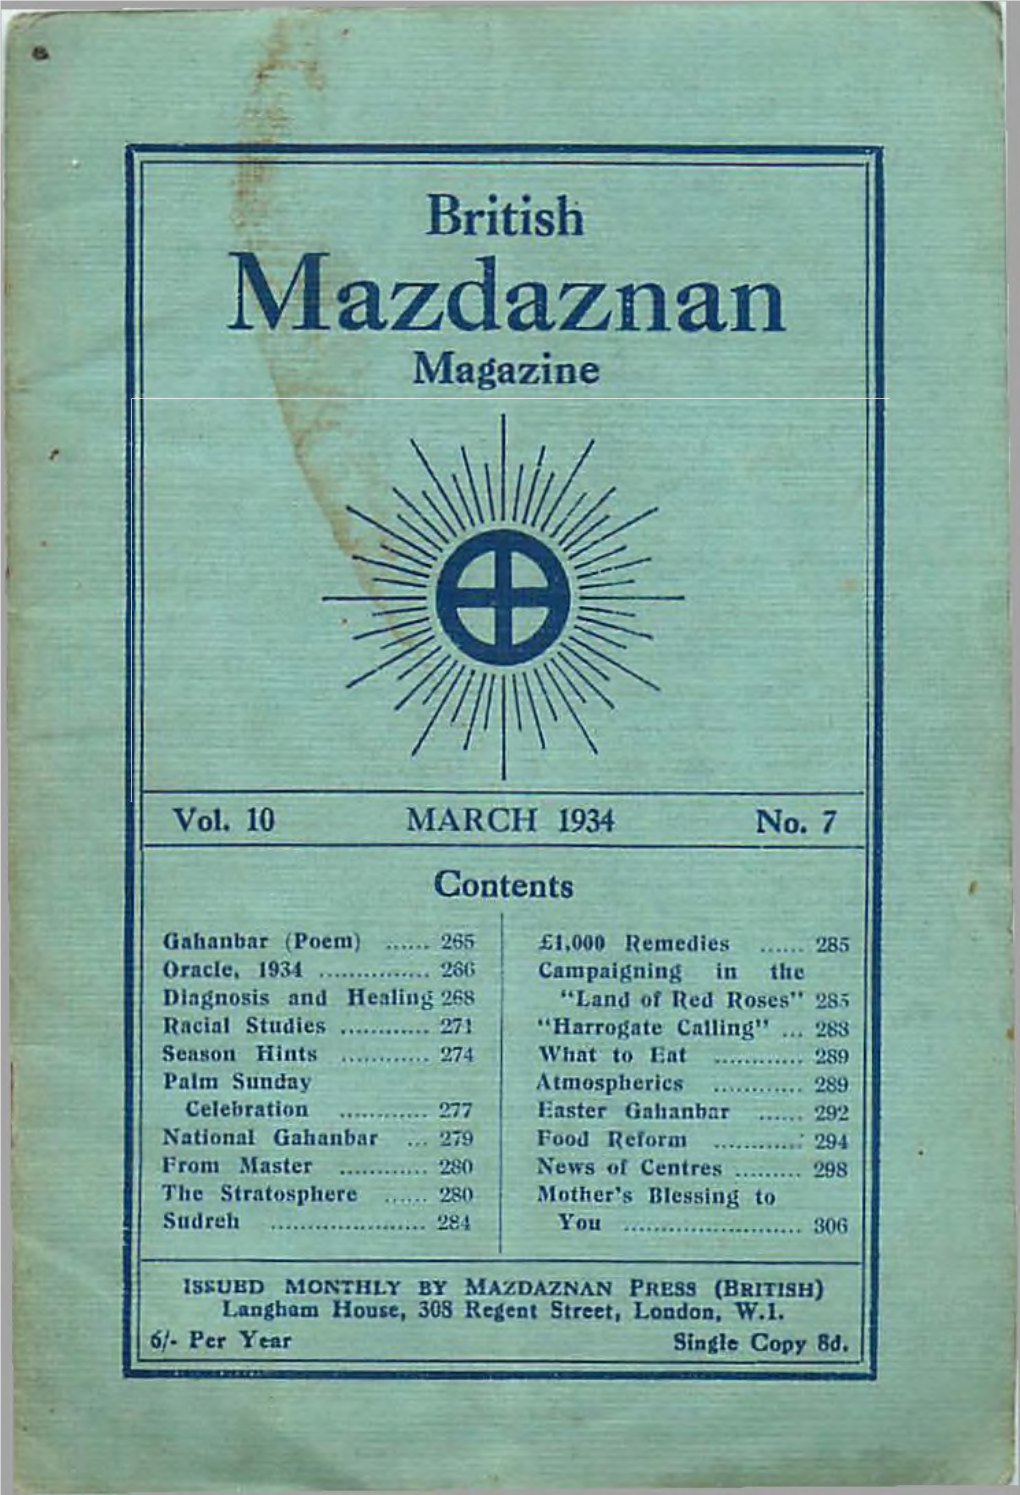 MAZDAZNAN PRESS (BRITISH) Lnngham House, 30S Regent Street, London, W .L